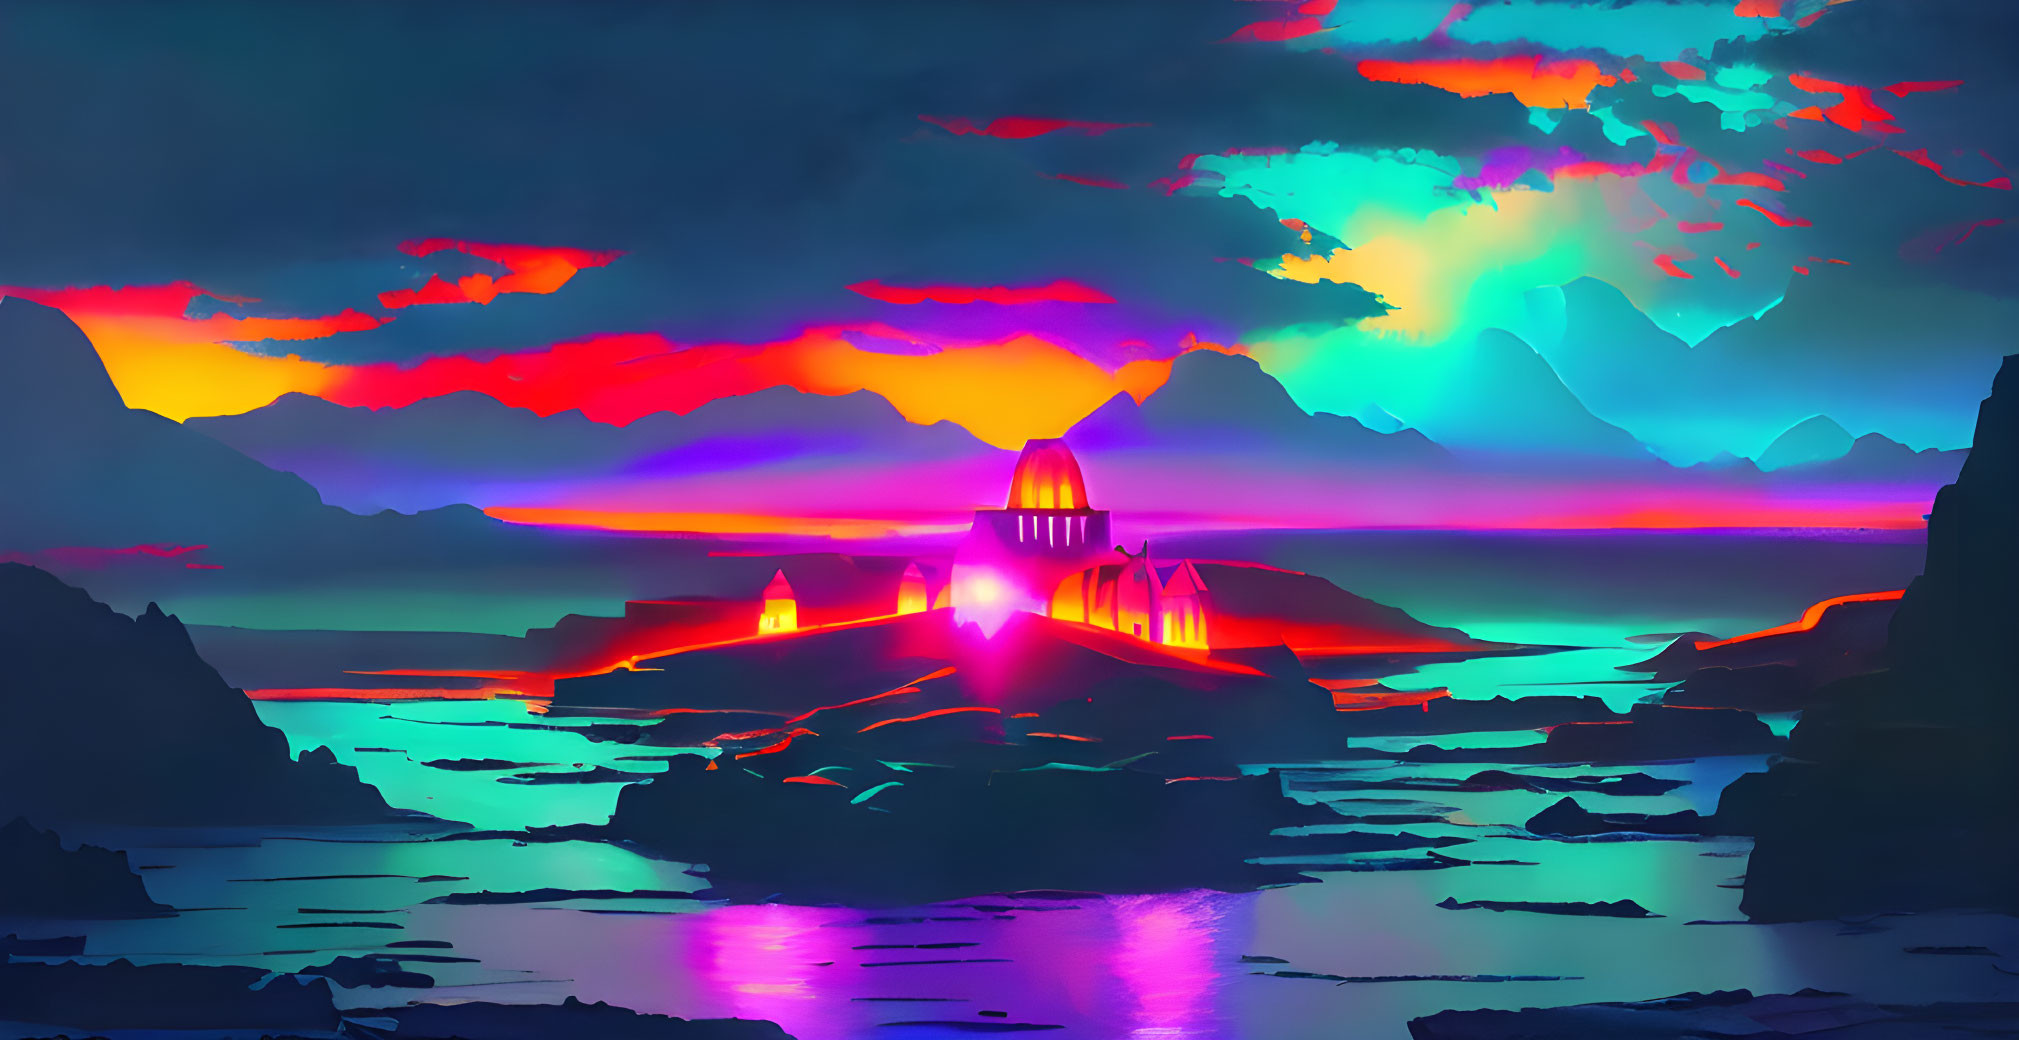 Colorful digital artwork of a glowing building in a fantastical landscape